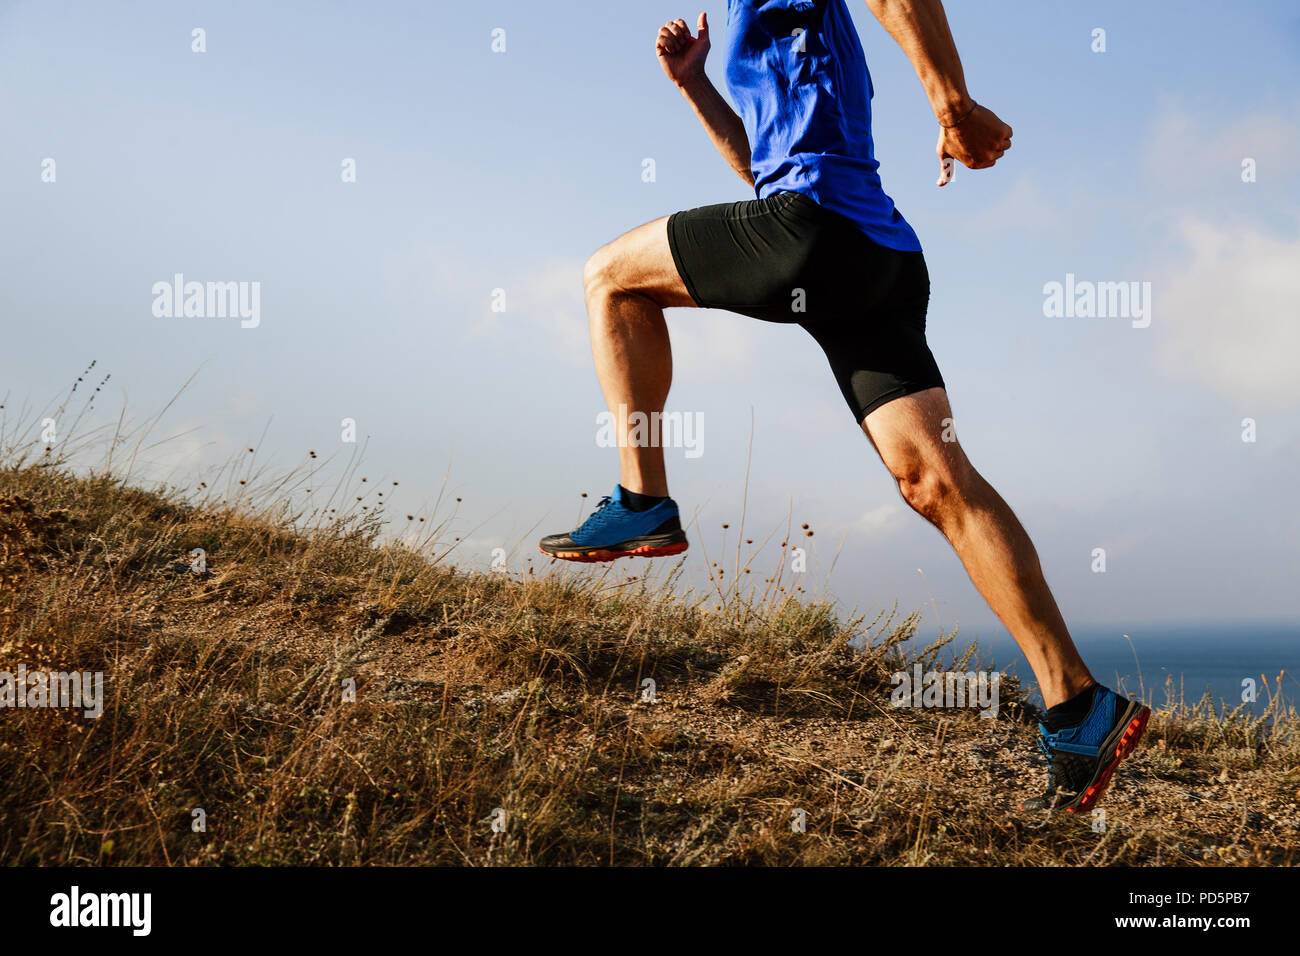 man athlete runner explosive running uphill on trail Stock Photo